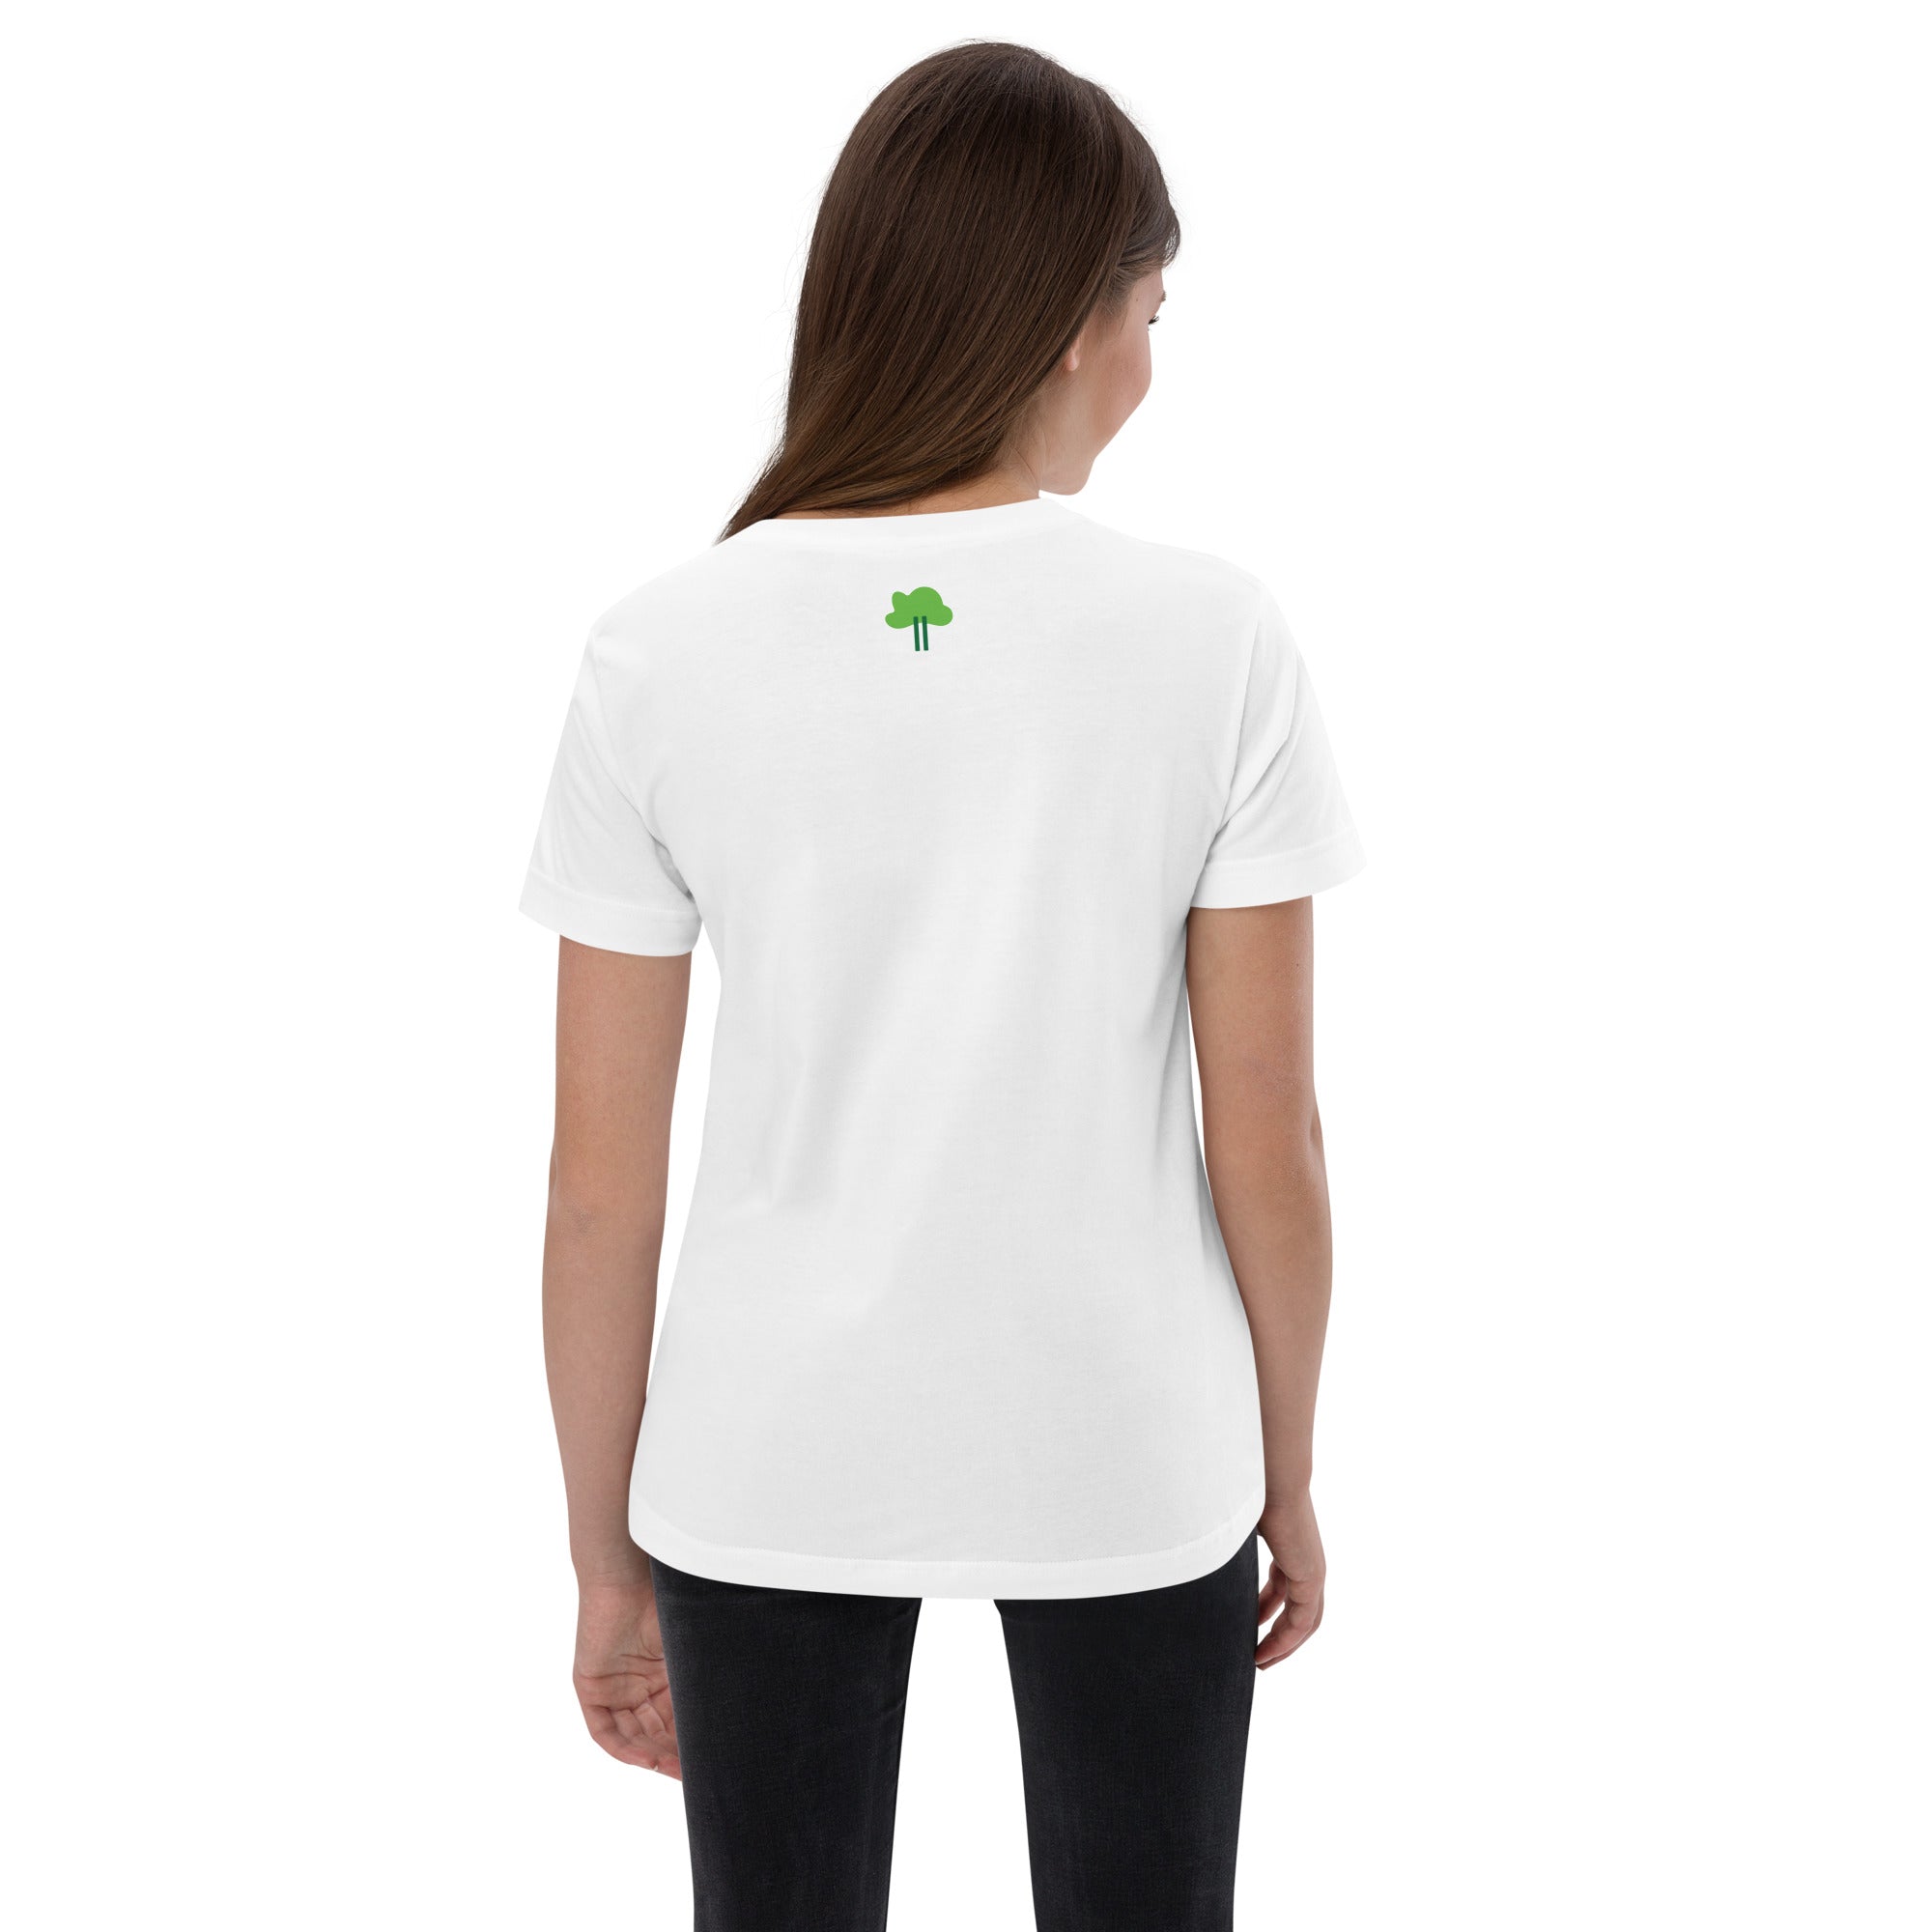 II Temp Sabana - K10 | Youth jersey t-shirt